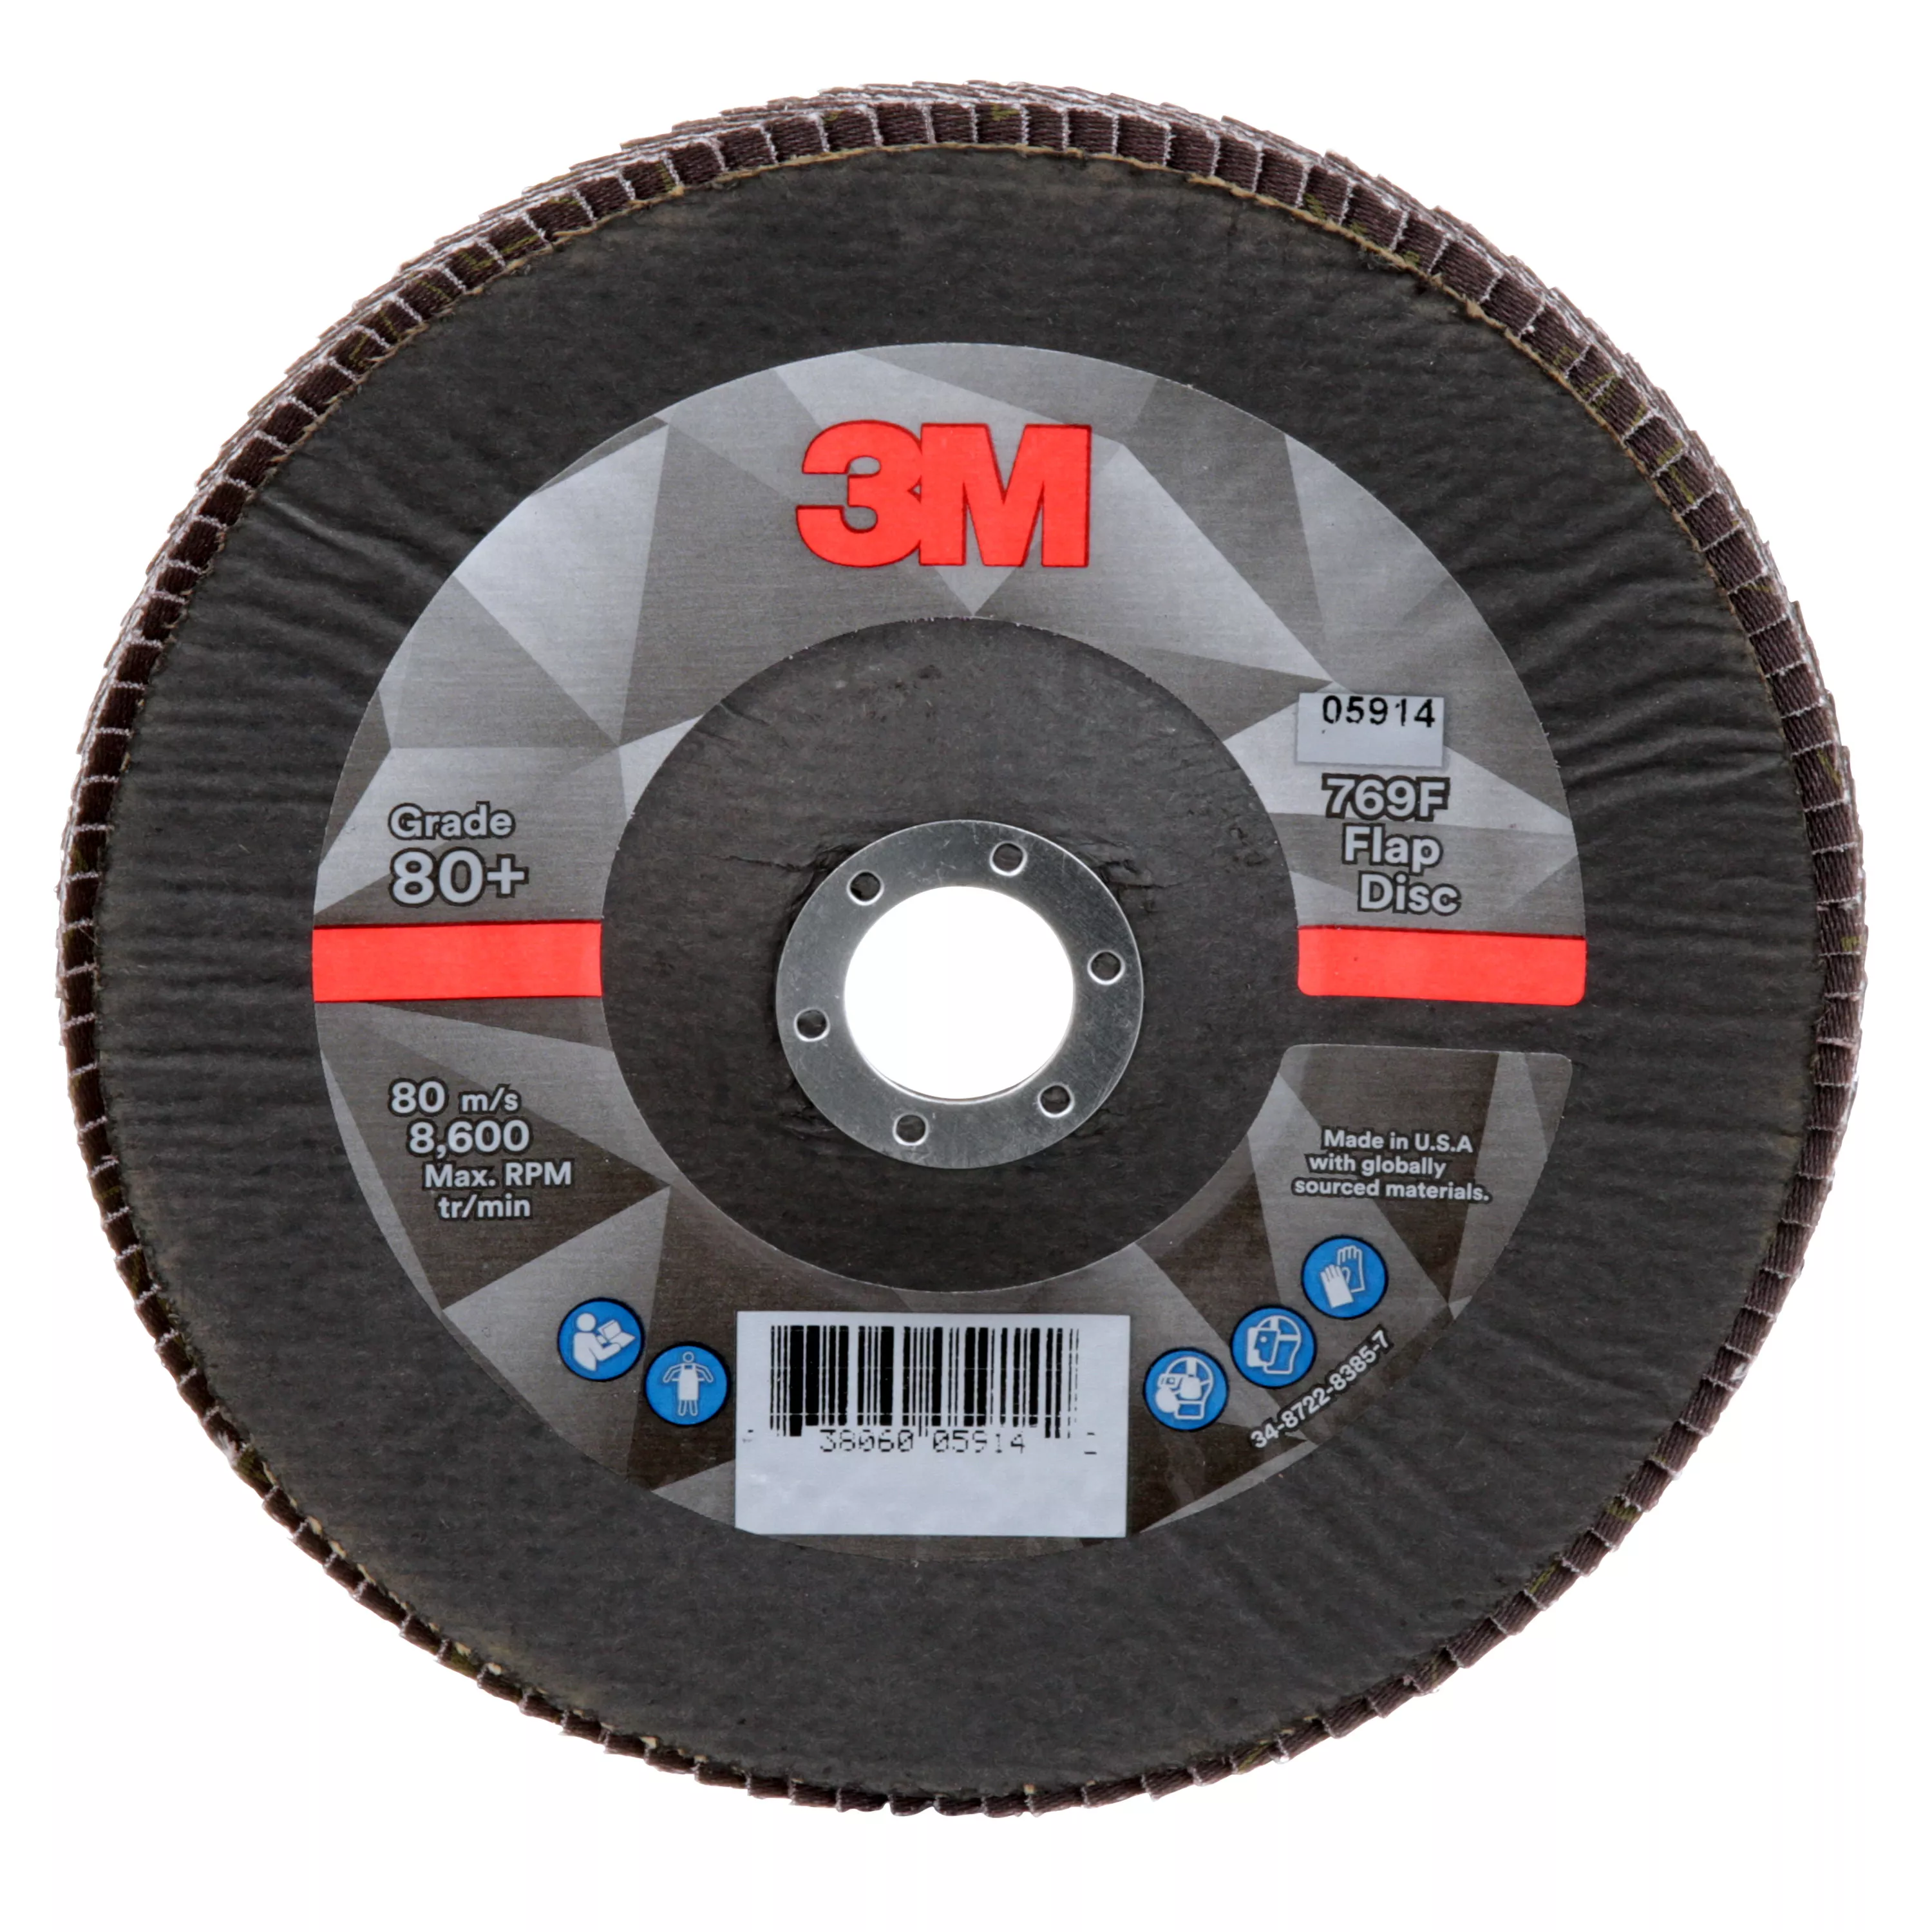 SKU 7100177999 | 3M™ Flap Disc 769F